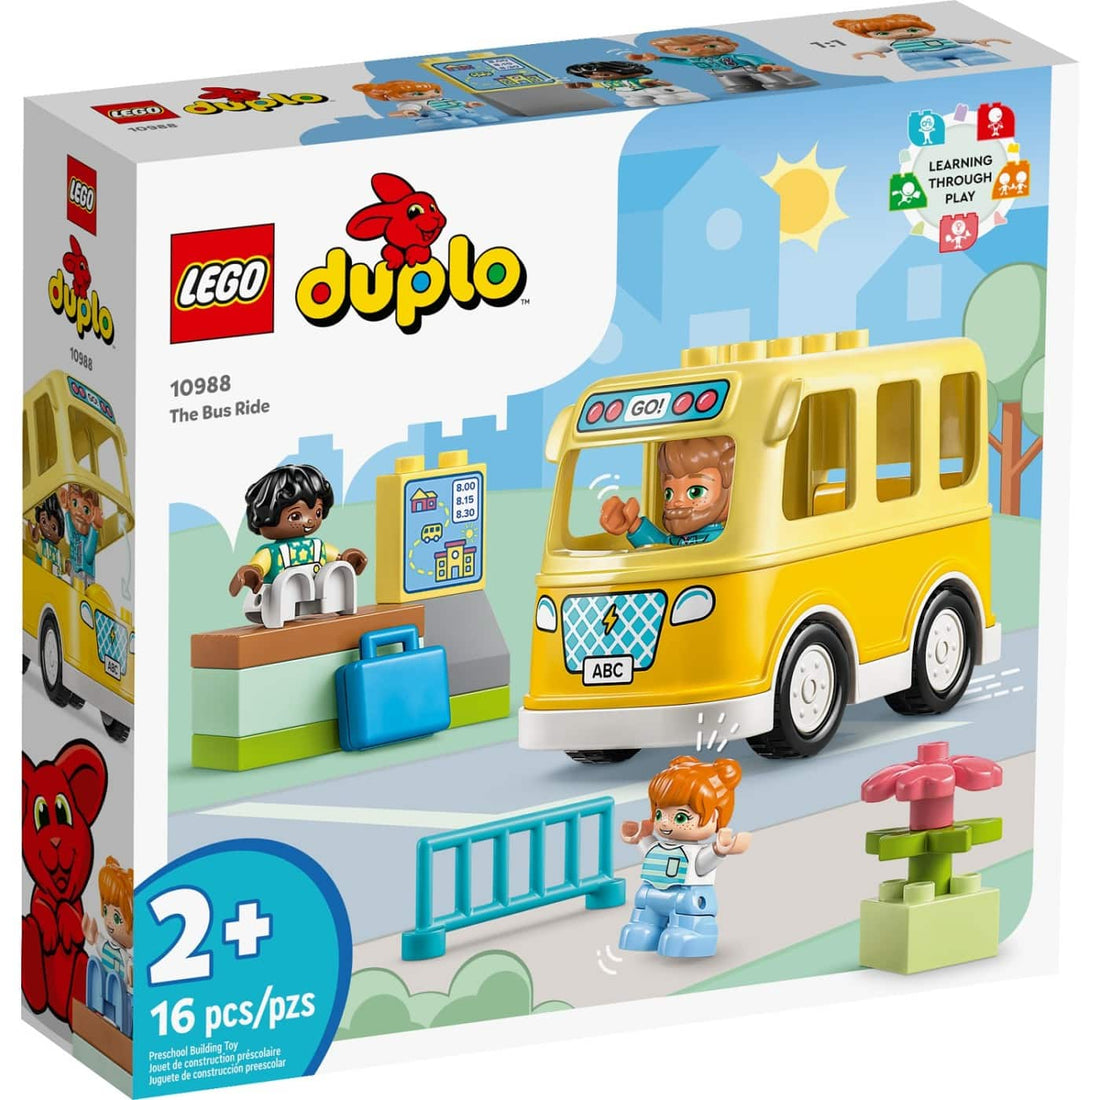 10988 Lego Duplo The Bus Ride